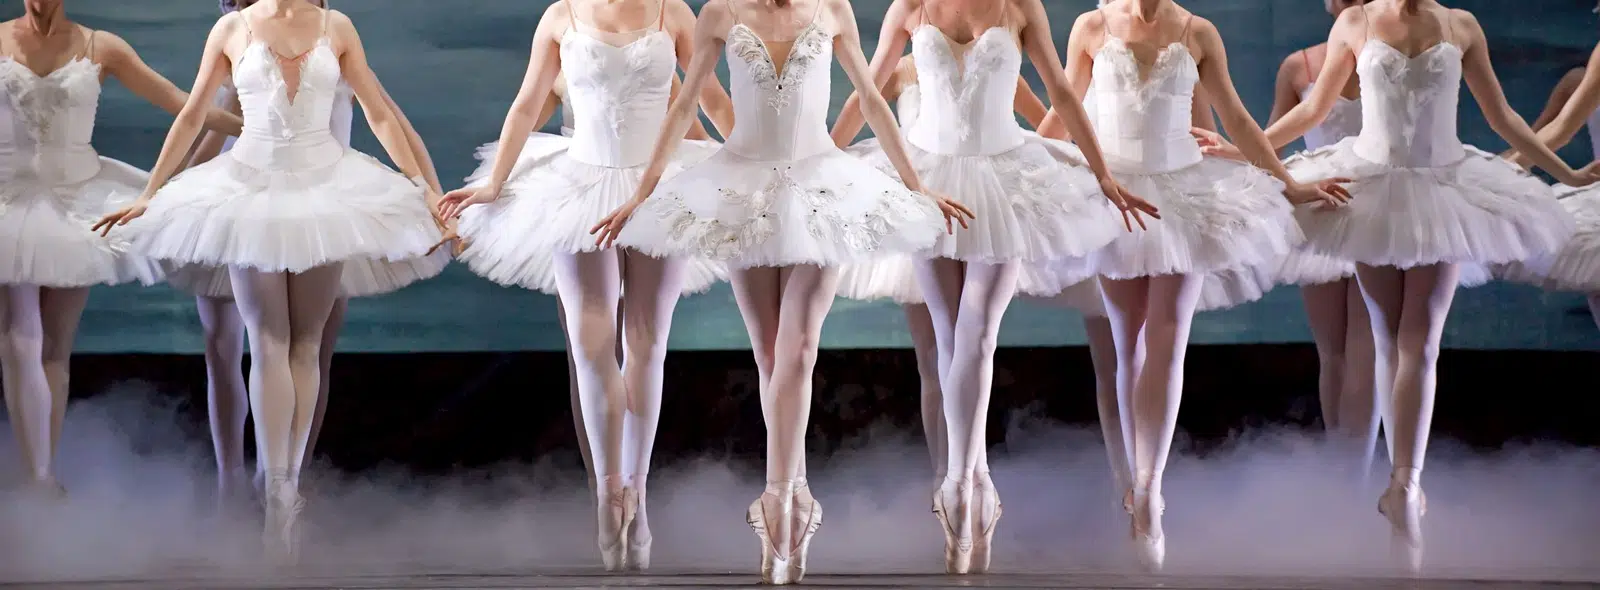 Ballet dancers at pointe dance